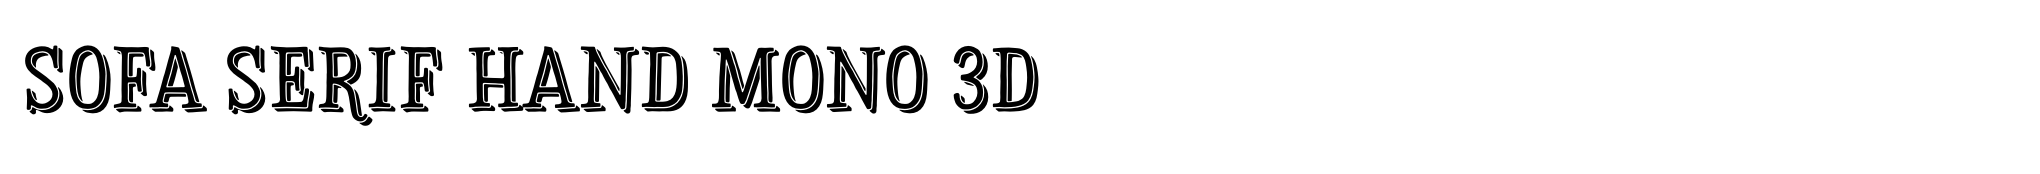 Sofa Serif Hand Mono 3D image